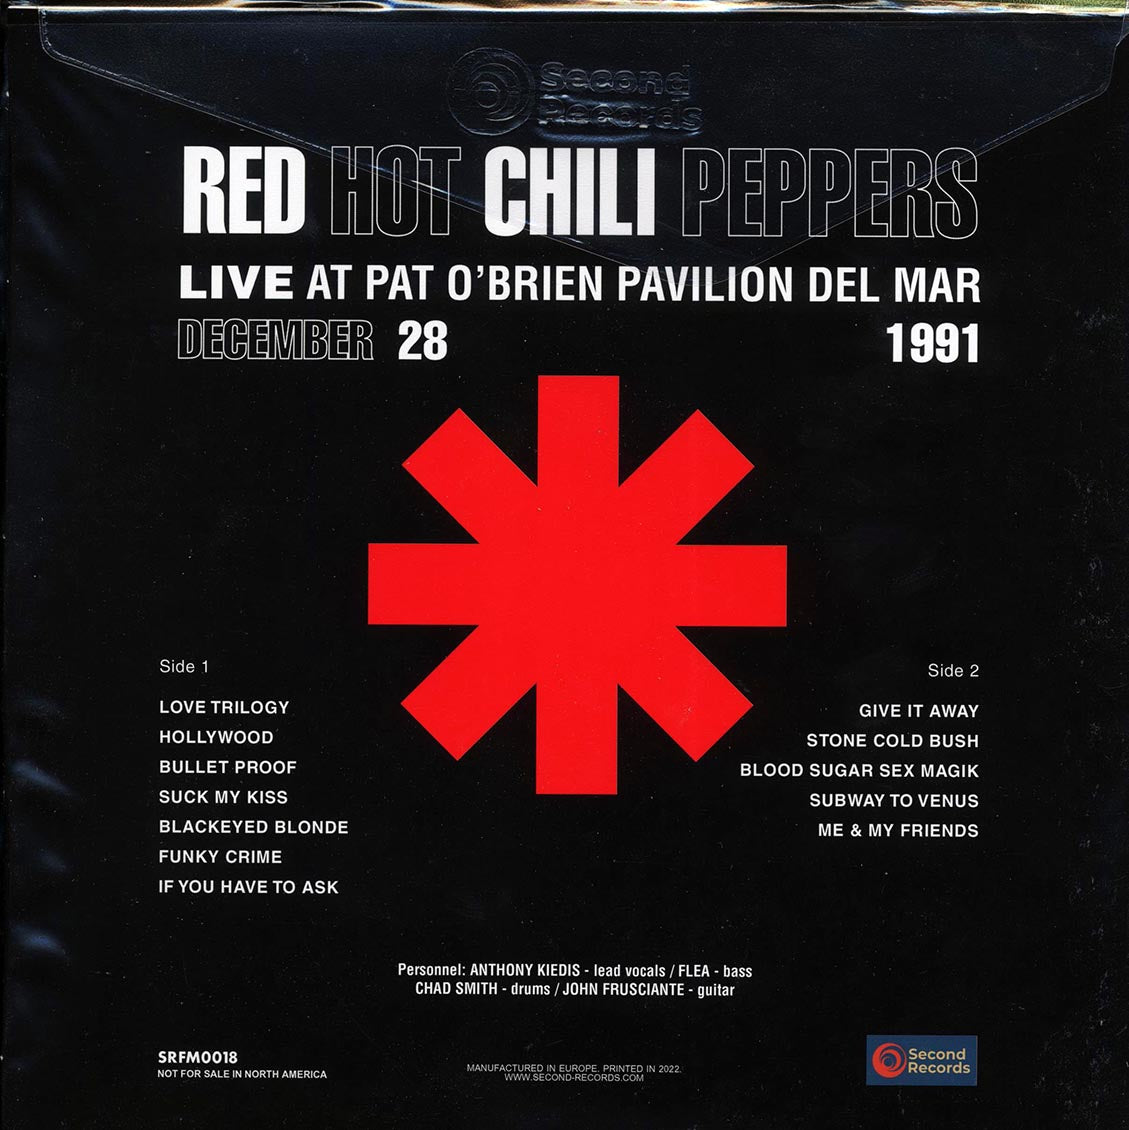 Red Hot Chili Peppers - Live At Pat O'Brien Pavilion Del Mar December 28 1991 (180g) (red vinyl) - Vinyl LP, LP